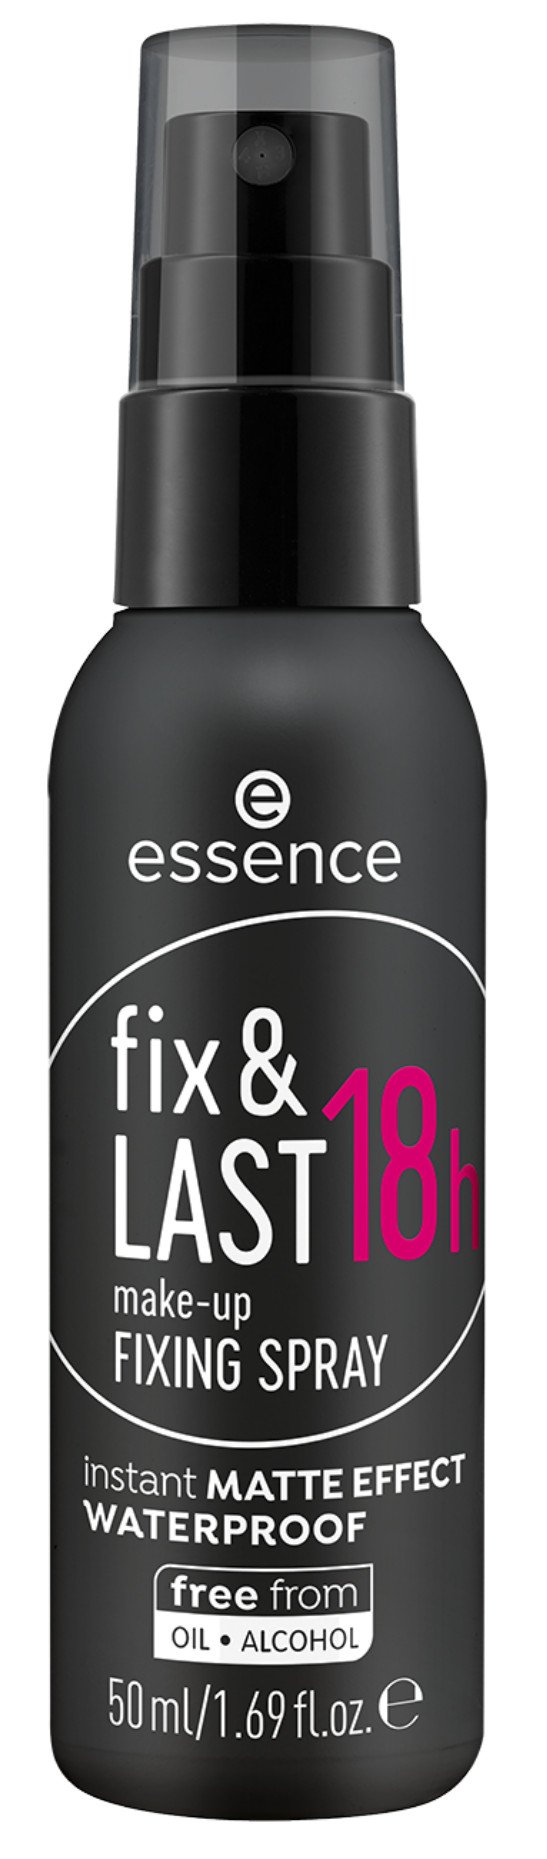 Spray Fixateur Stay 18h essence